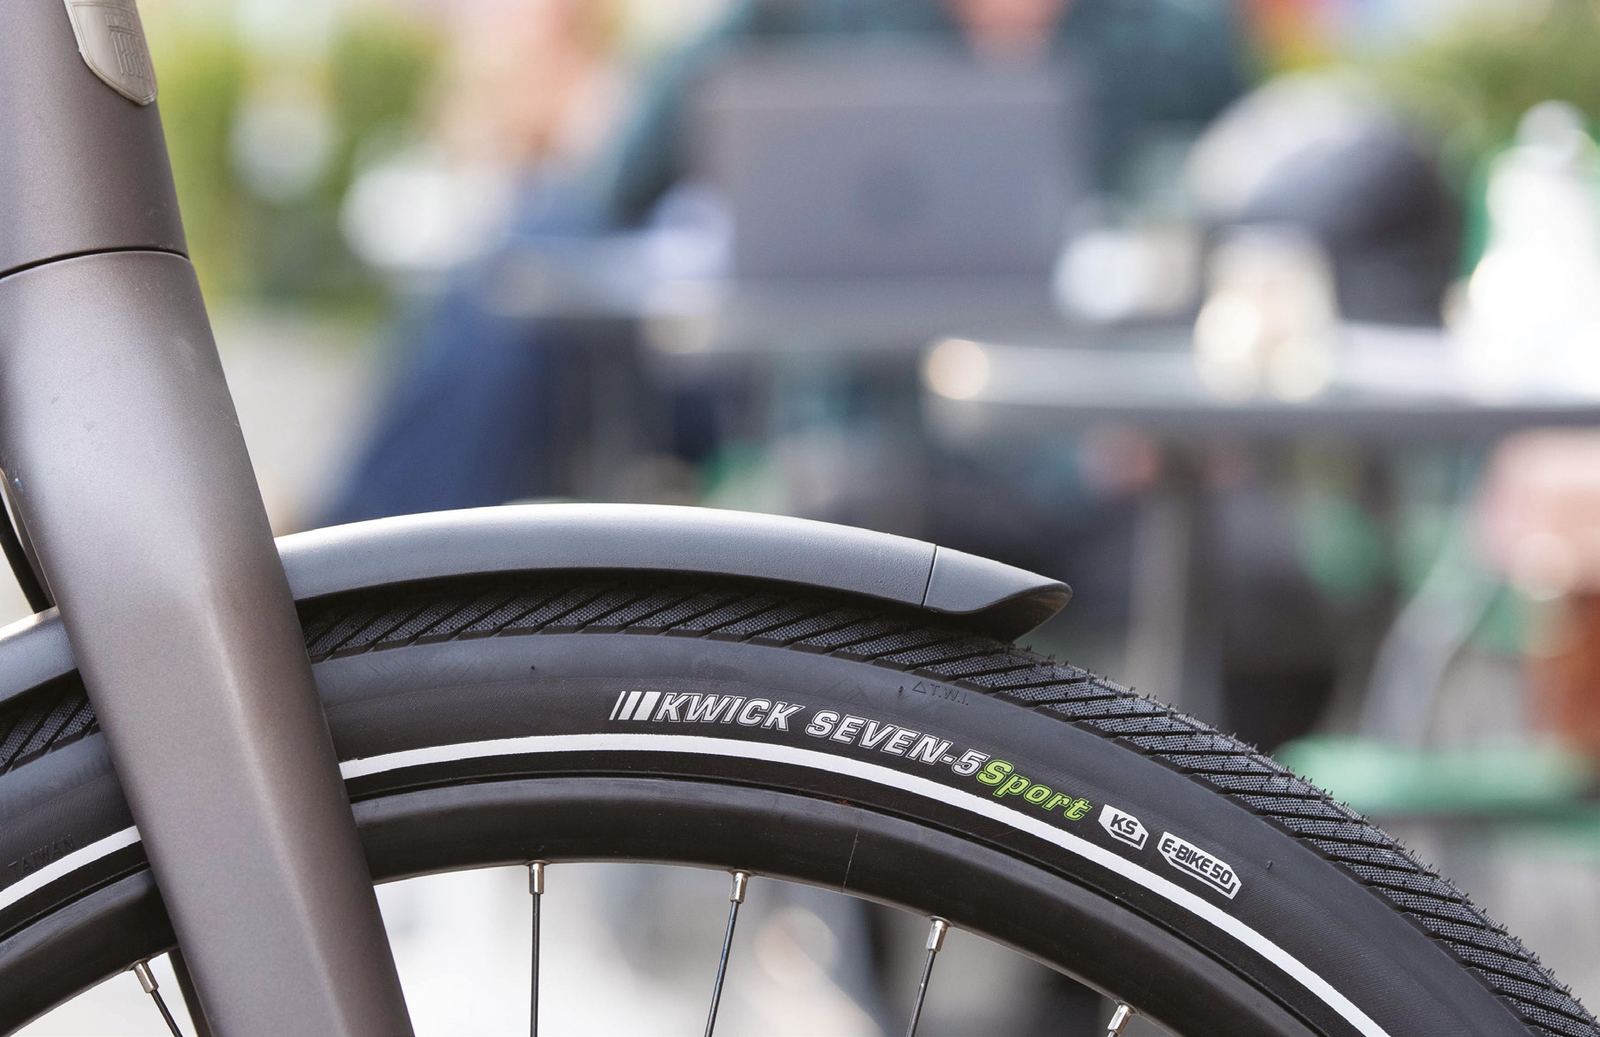 KENDA Kwick Seven on commuter bike front wheel shown with fender